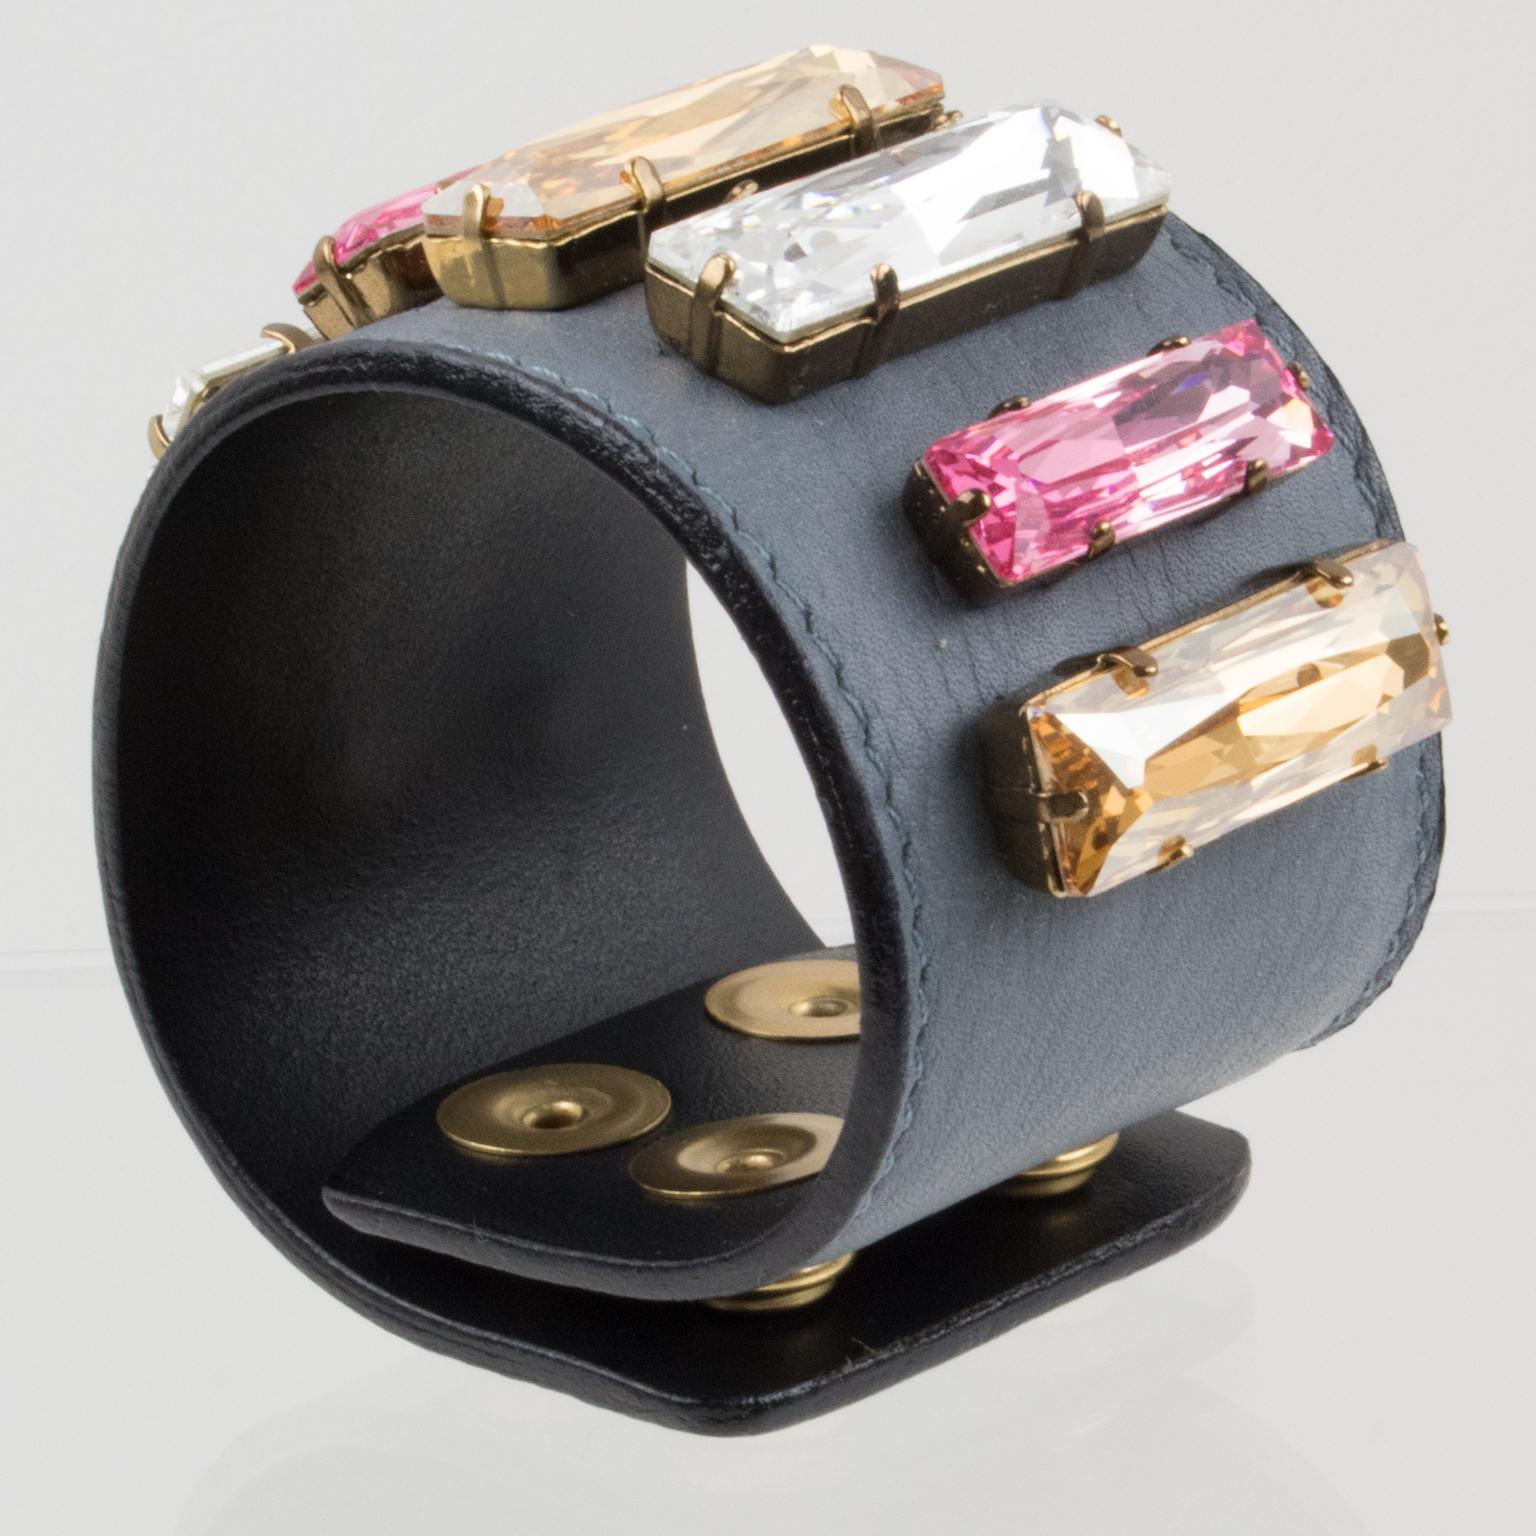 Sonia Rykiel Paris Pastel Jeweled and Gray Leather Belt Bracelet For Sale 7